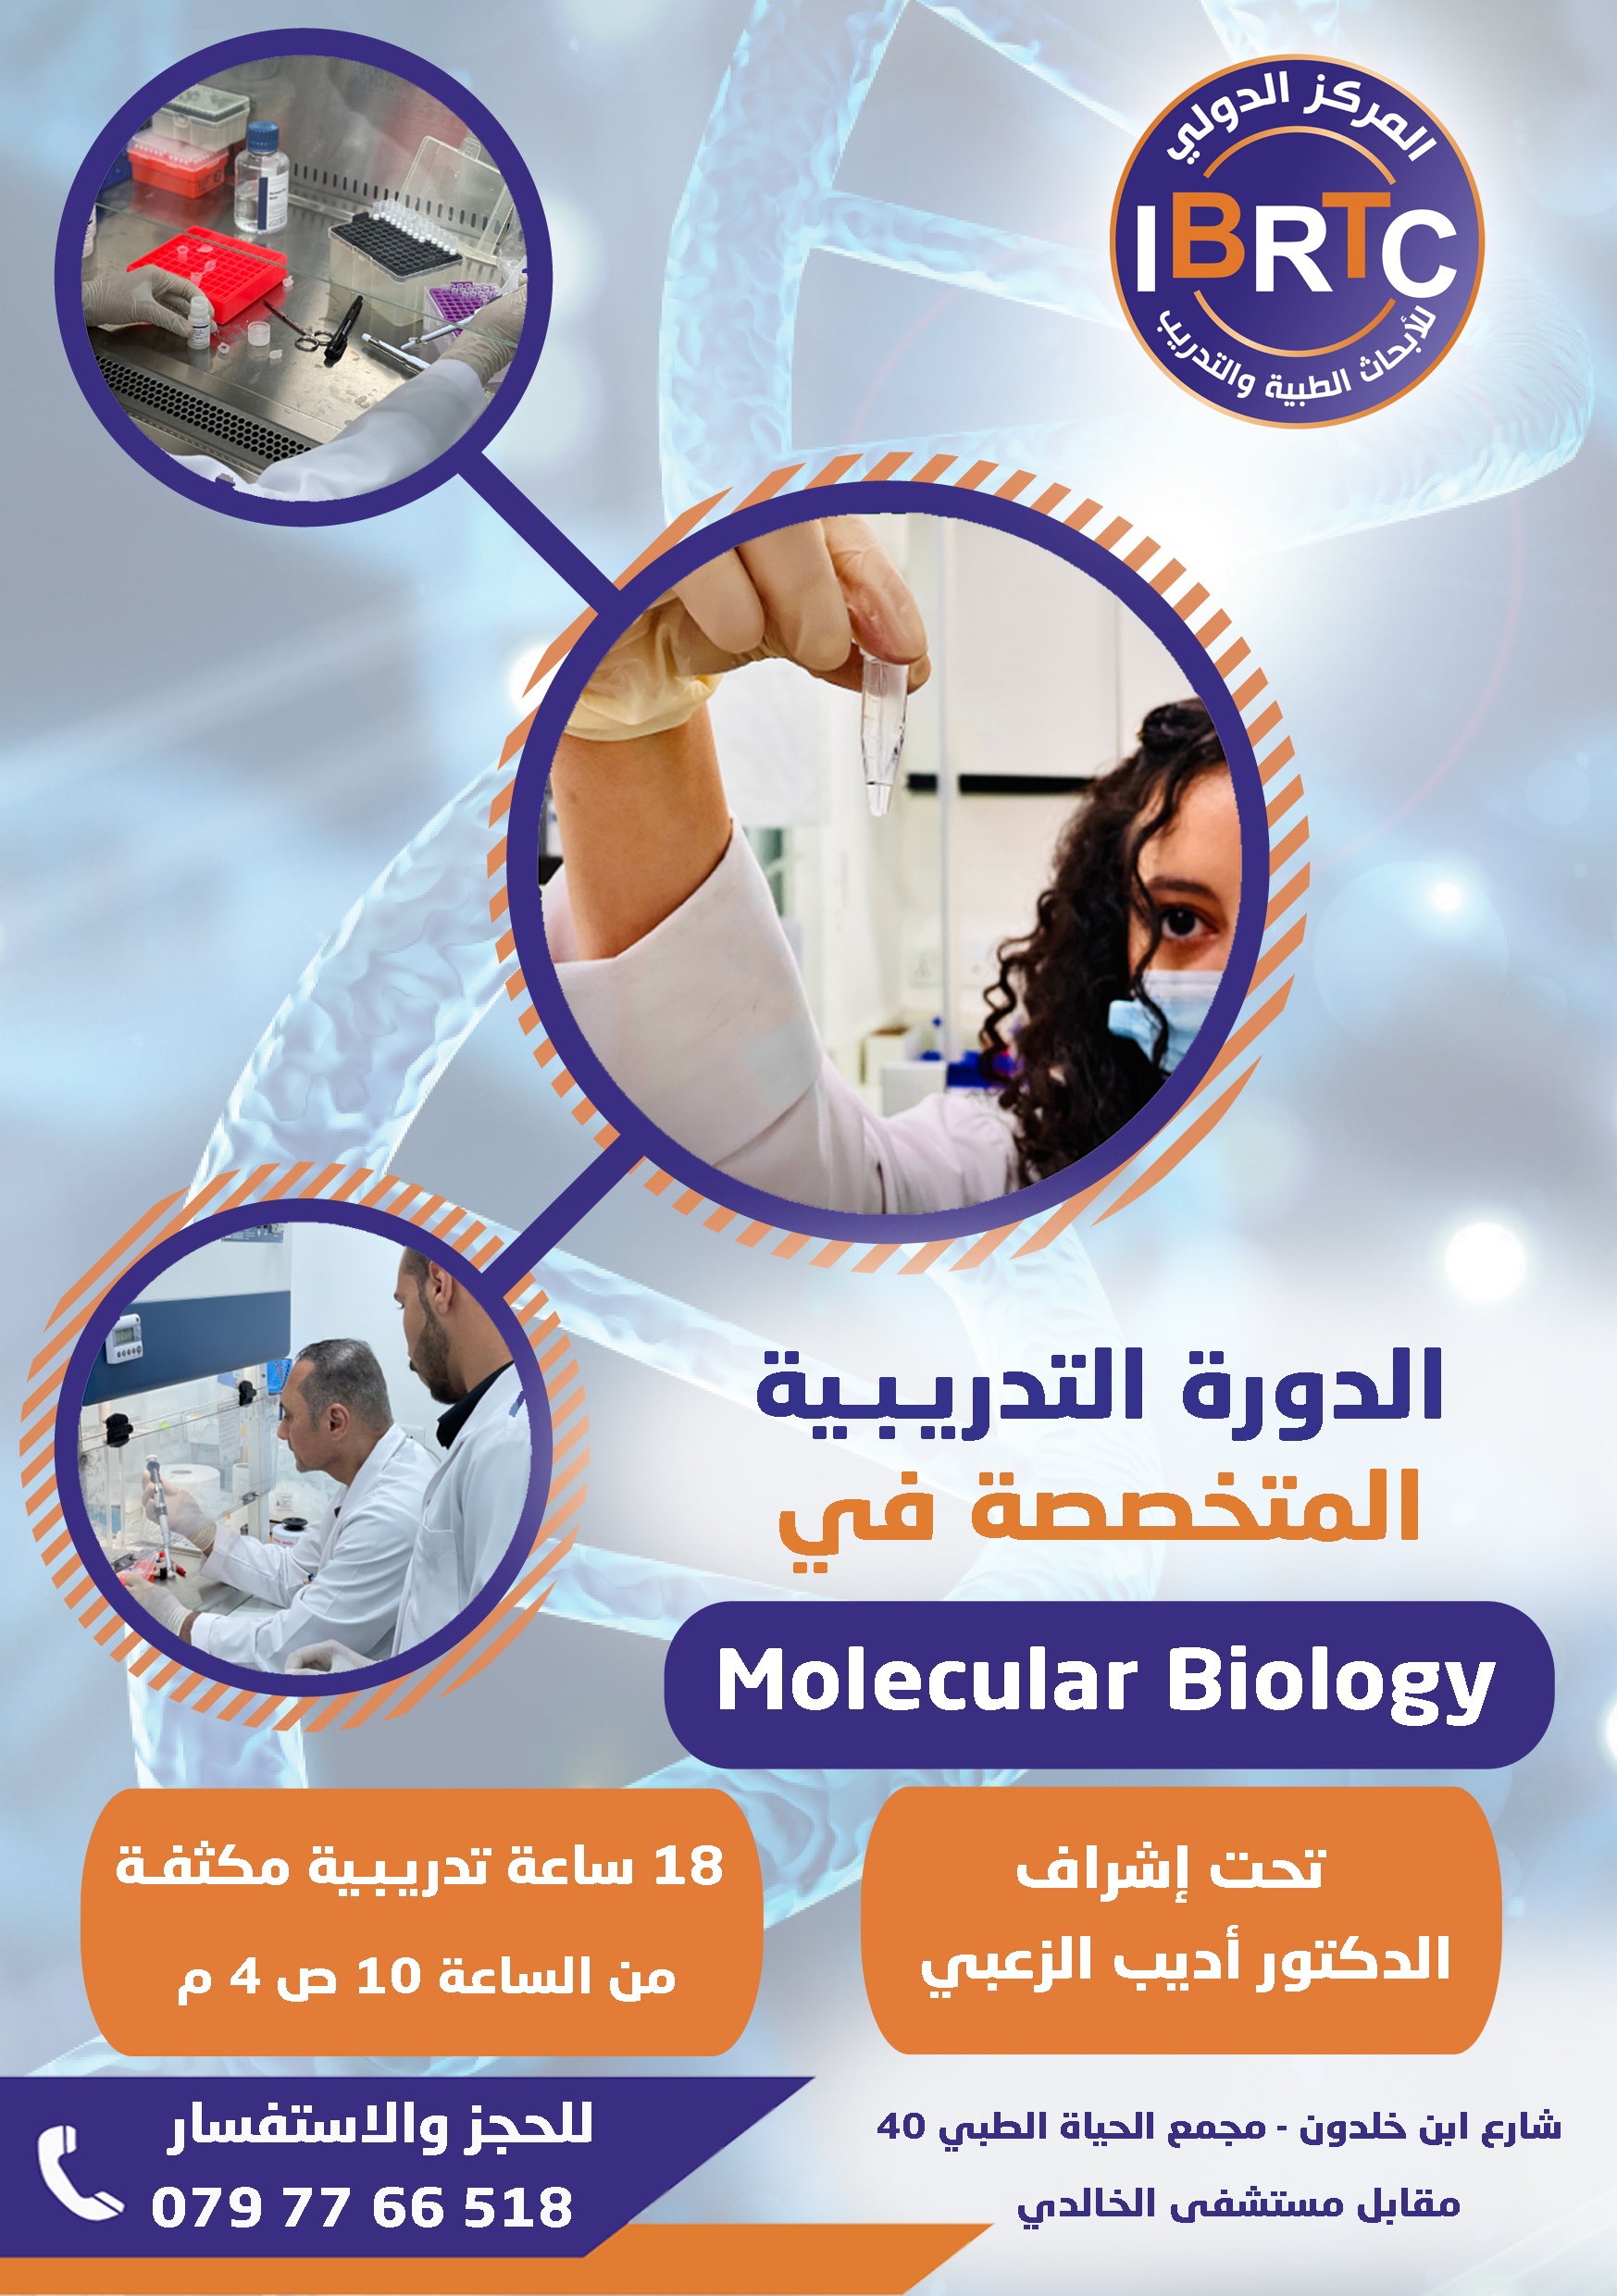 Best Molecular Biology Courses & Certifications ، Learn Molecular Biology ،Molecular Biology Courses دورات